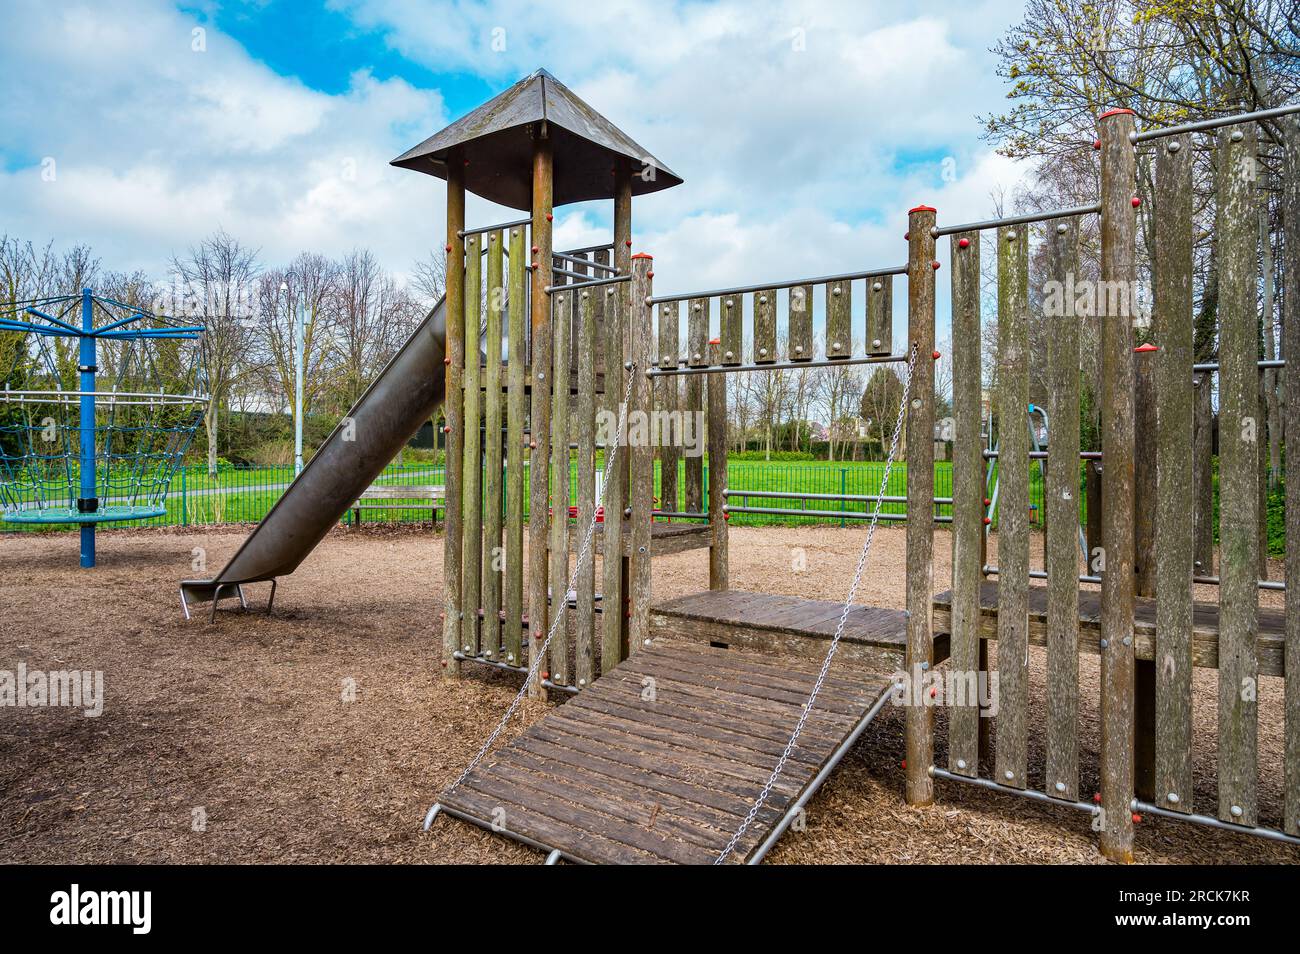 Wooden Play Park for Children, Swords, Dublin, Republic of Ireland Stock Photo